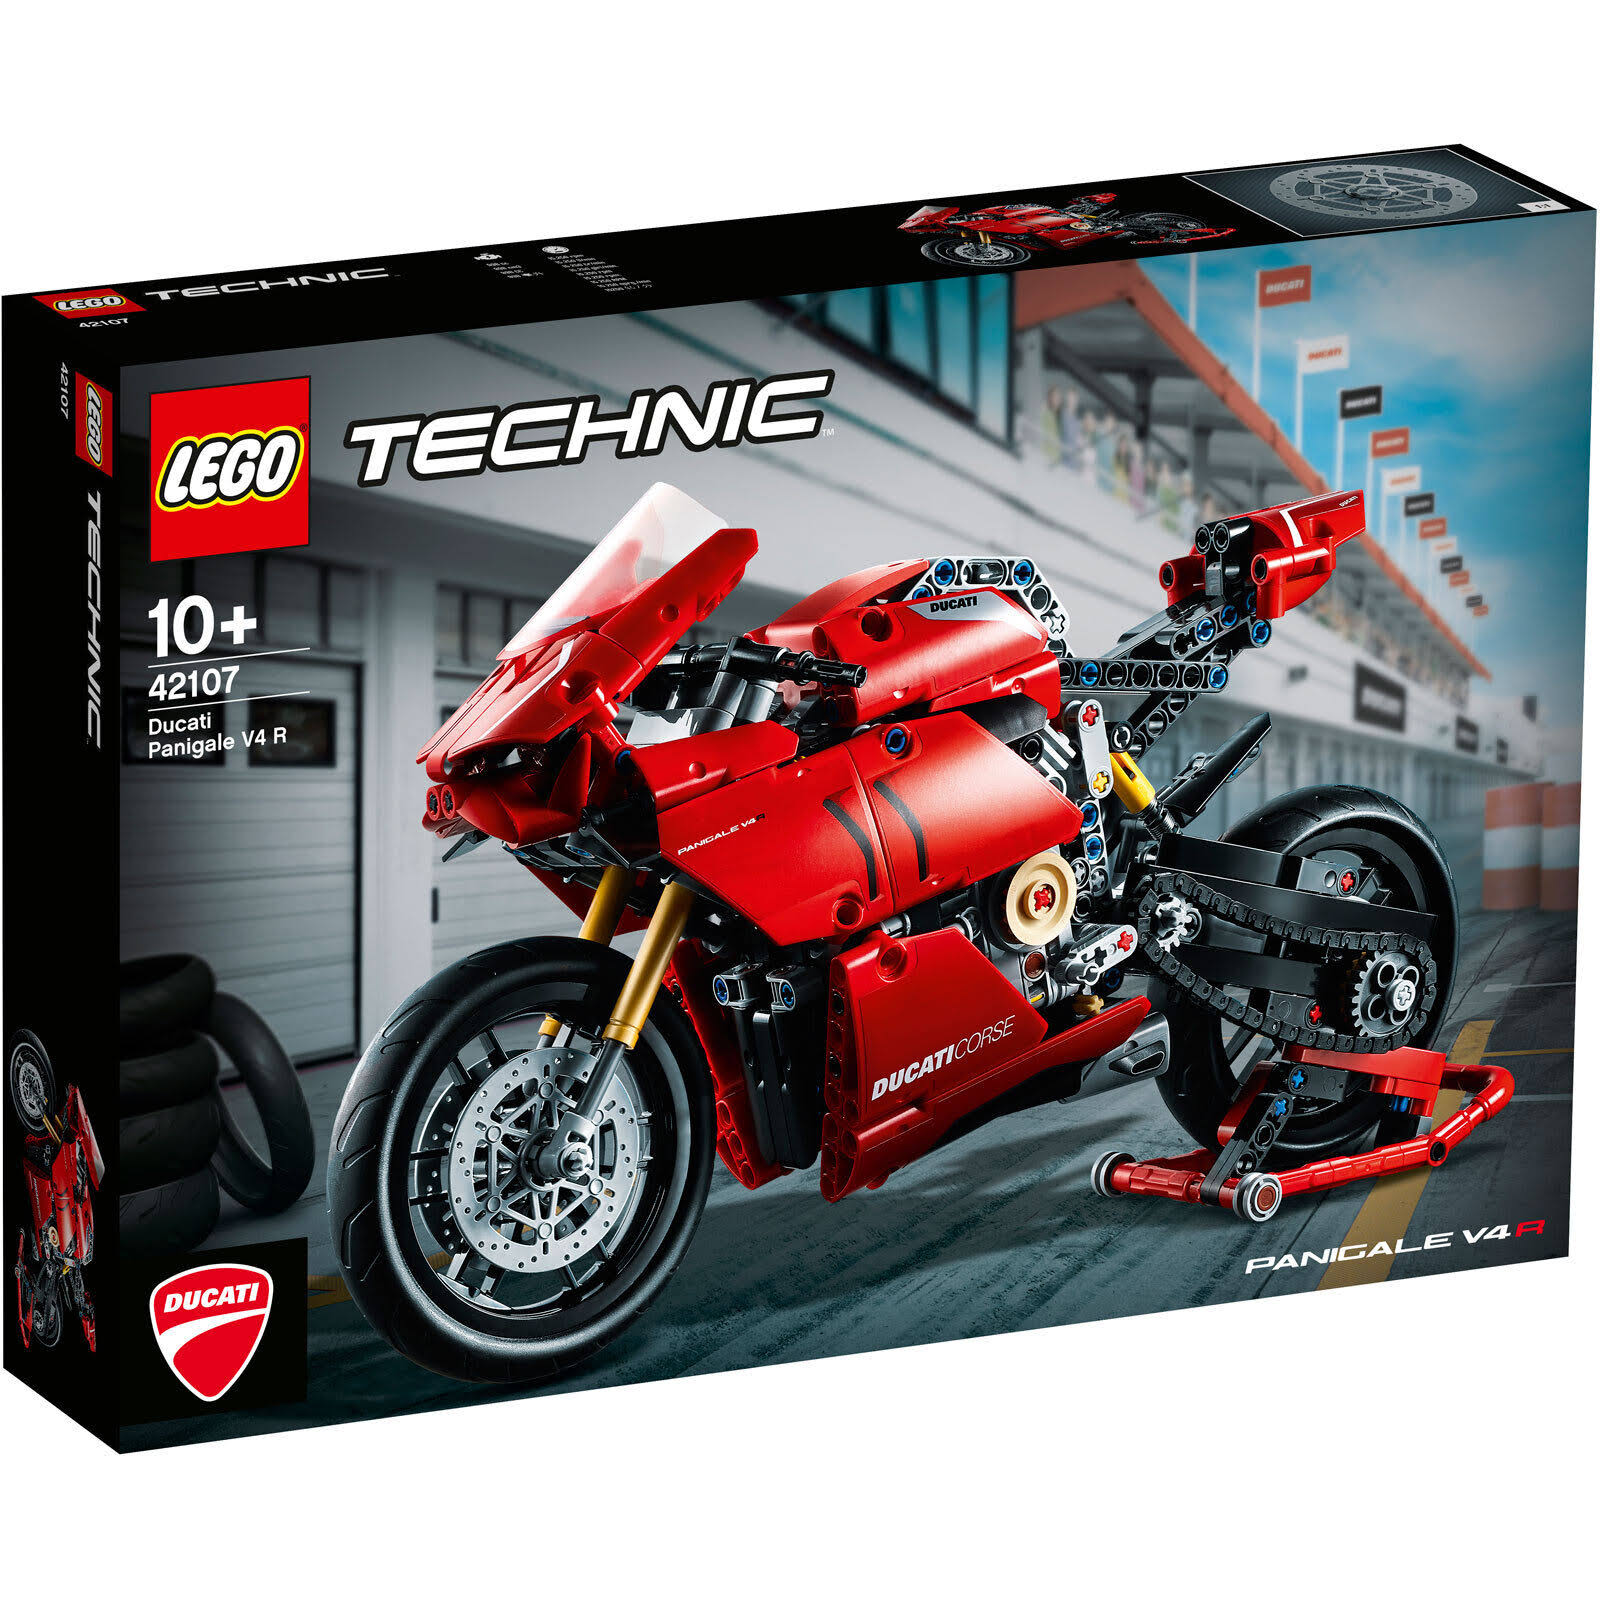 LEGO 42107 Technic Ducati Panigale V4 R. LEGO. LEGO Complete Sets & Packs. 0673419318600.